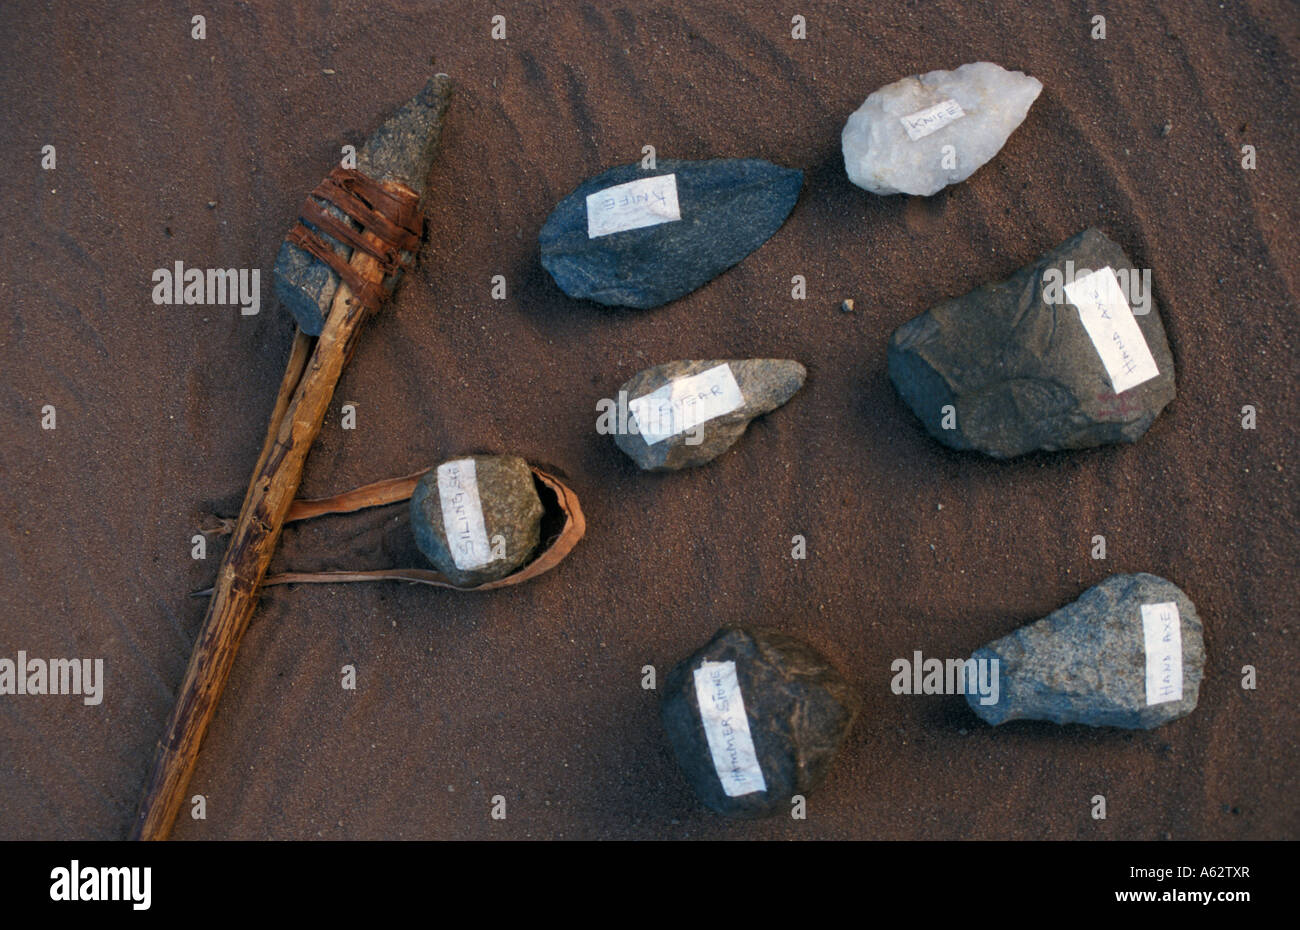 Isimila stone age site tools used by people 60 000 years ago Iringa Tanzania Stock Photo